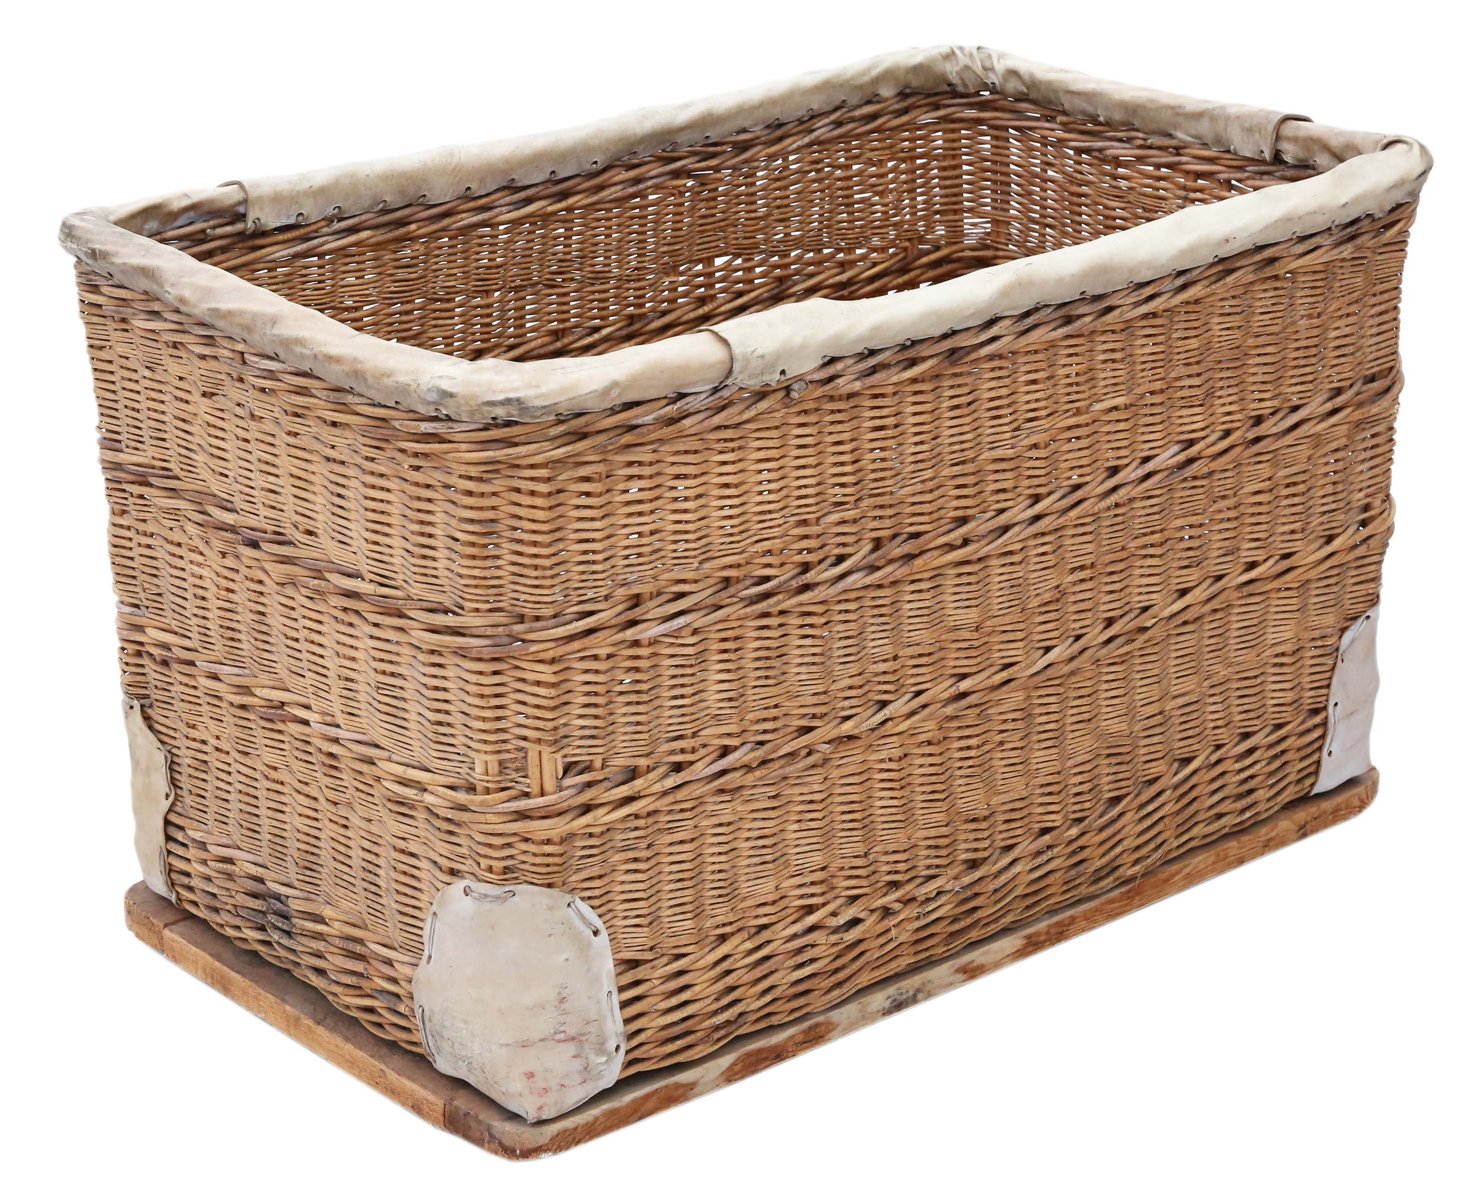 MEDIUM rectangle brown Cane basket with handle 36cm x 24CM, 10 CM DEEP 